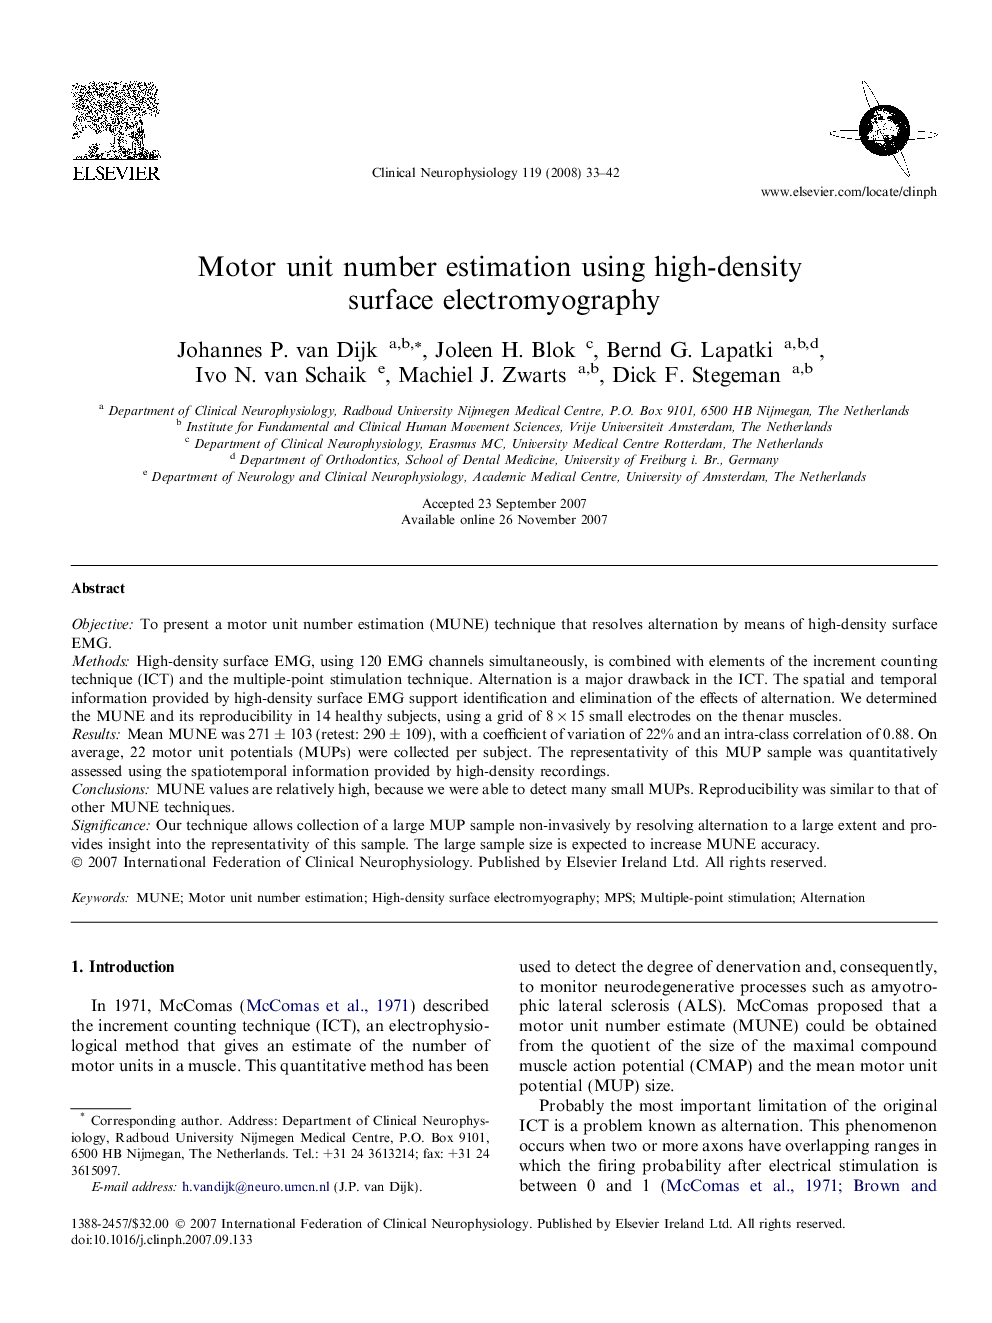 Motor unit number estimation using high-density surface electromyography